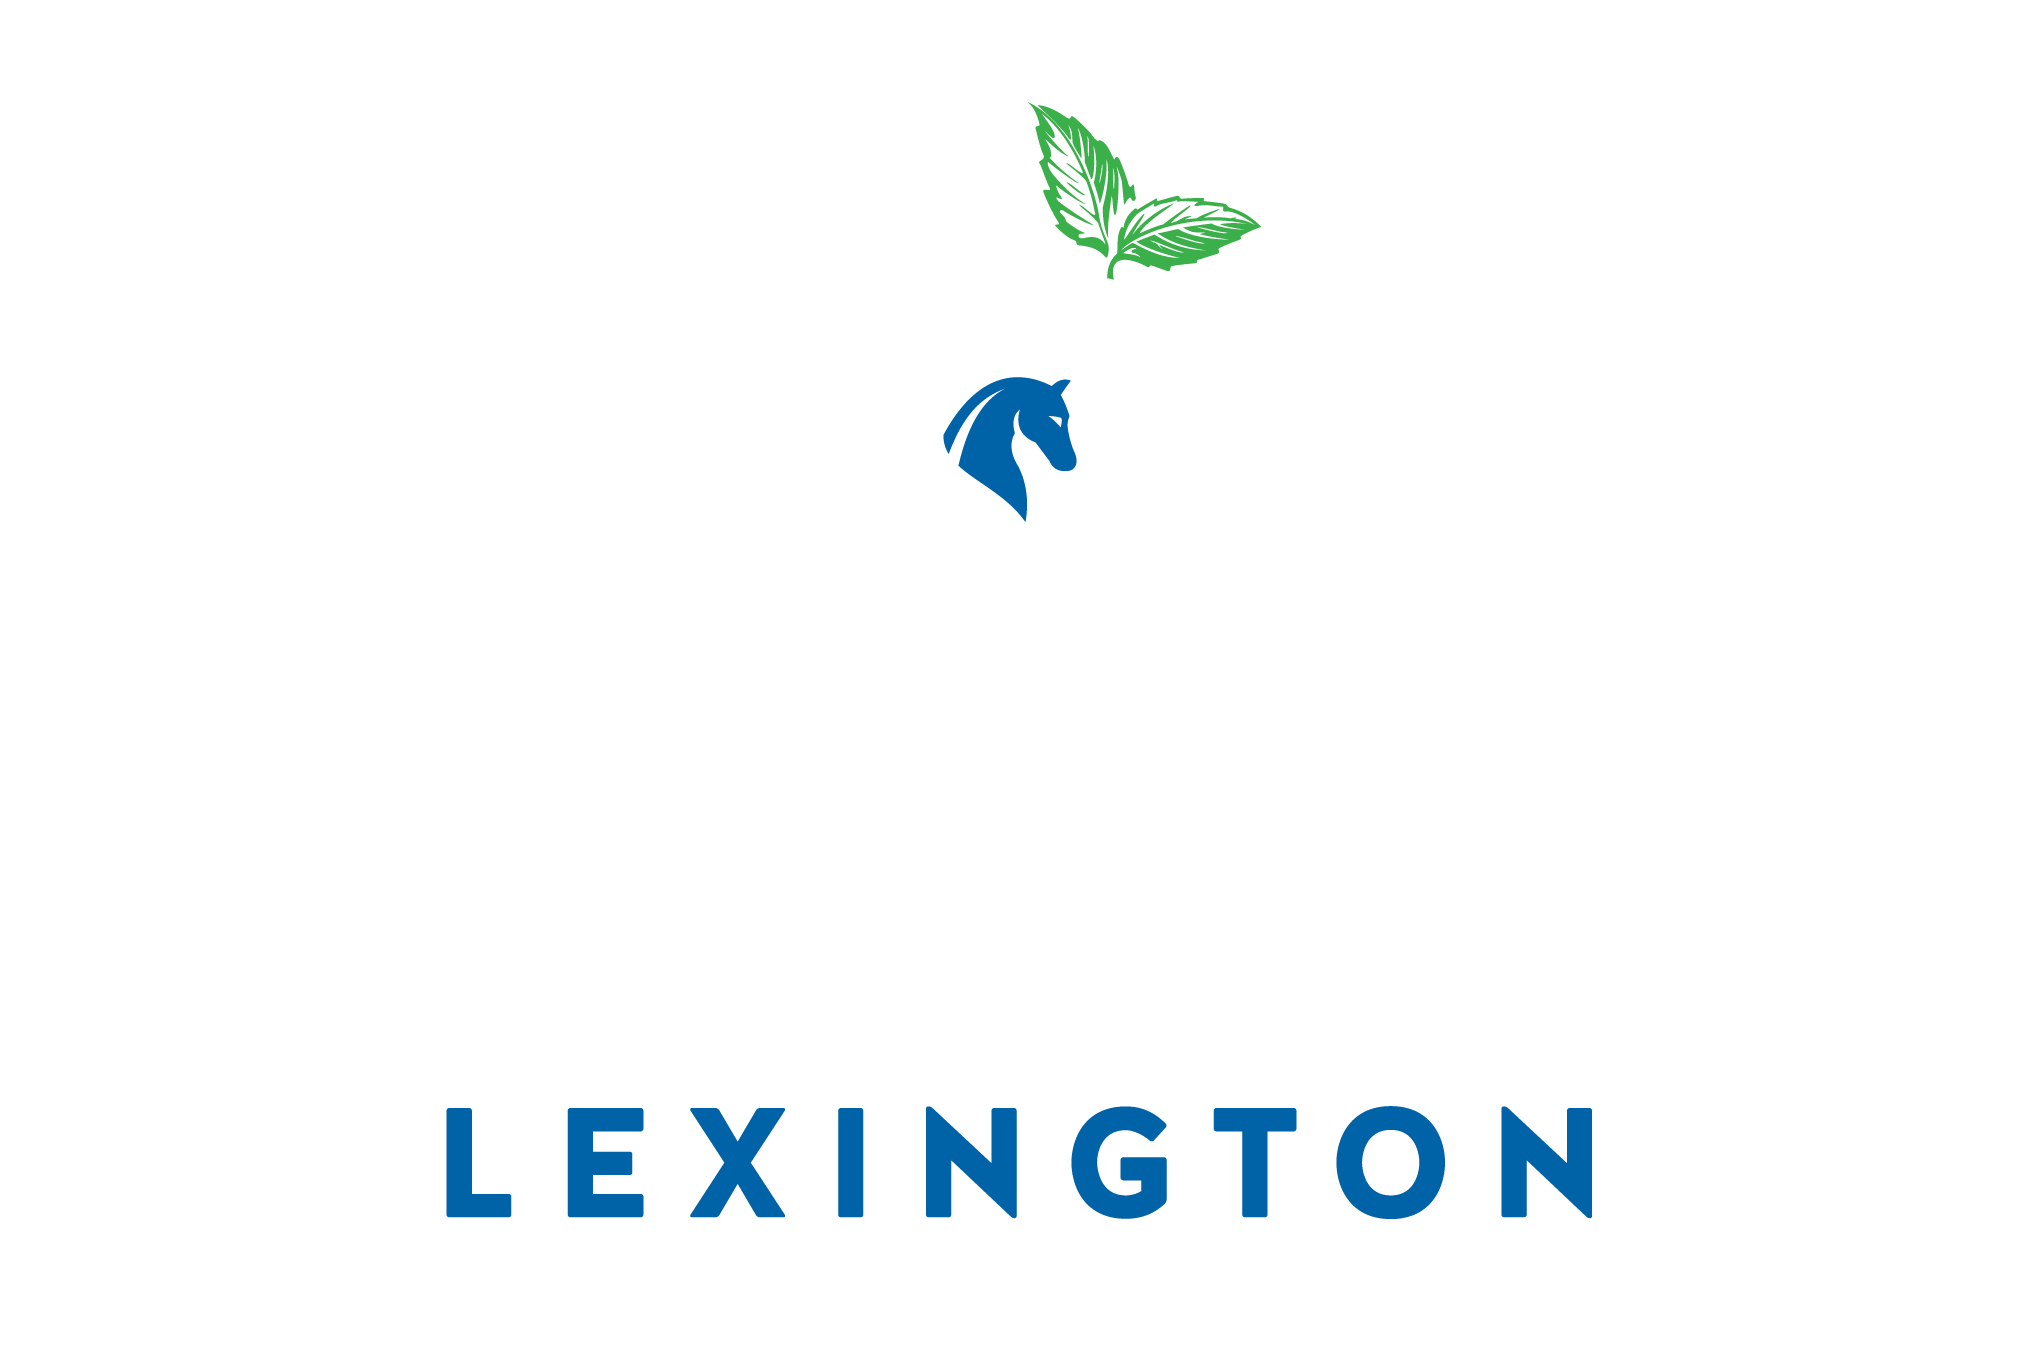 Mint Julep Experiences